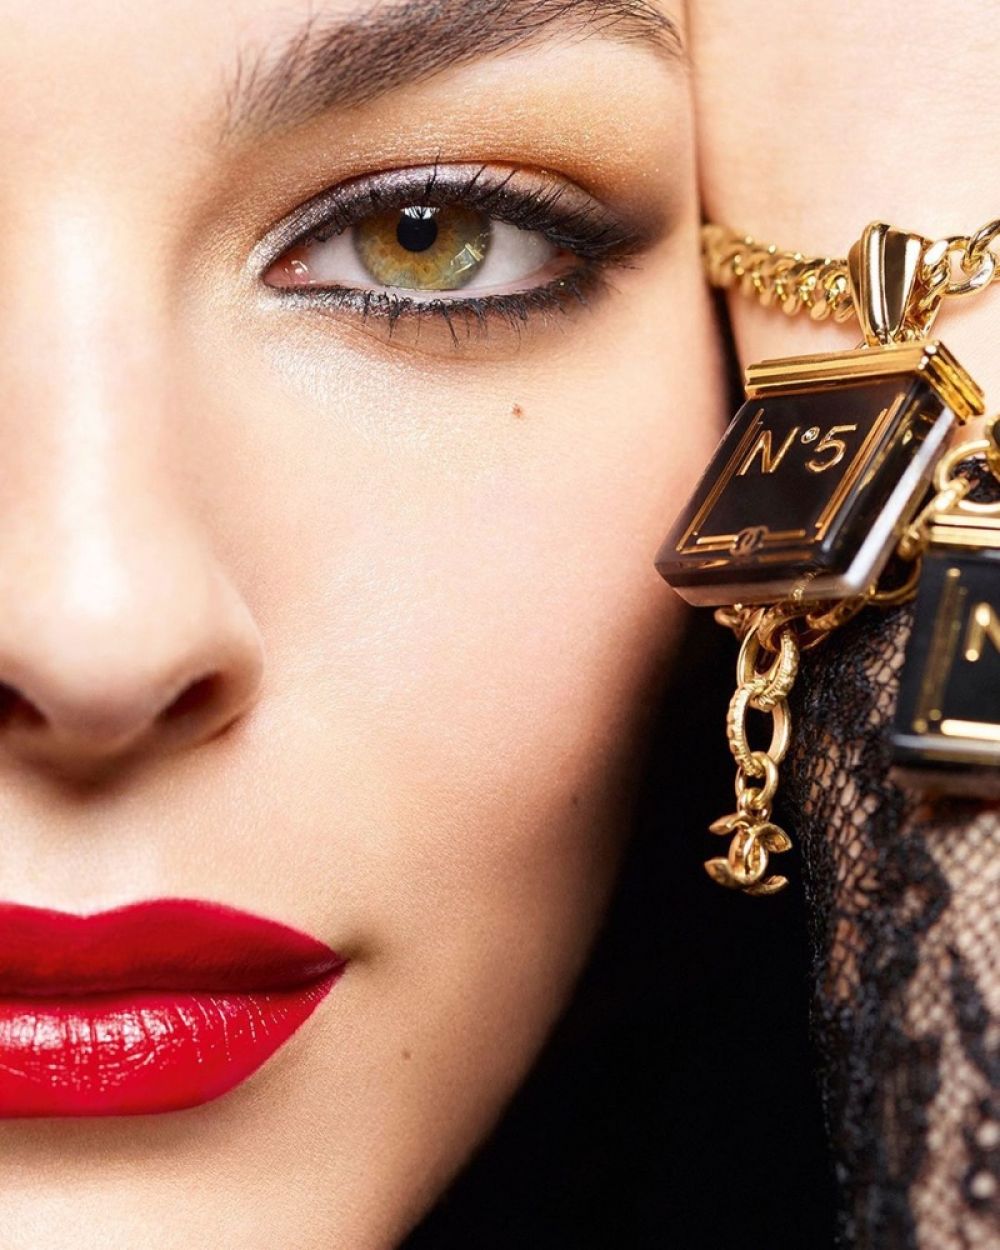 Vittoria Cerreti For Chanel Makeup Holiday 2021 Campaign